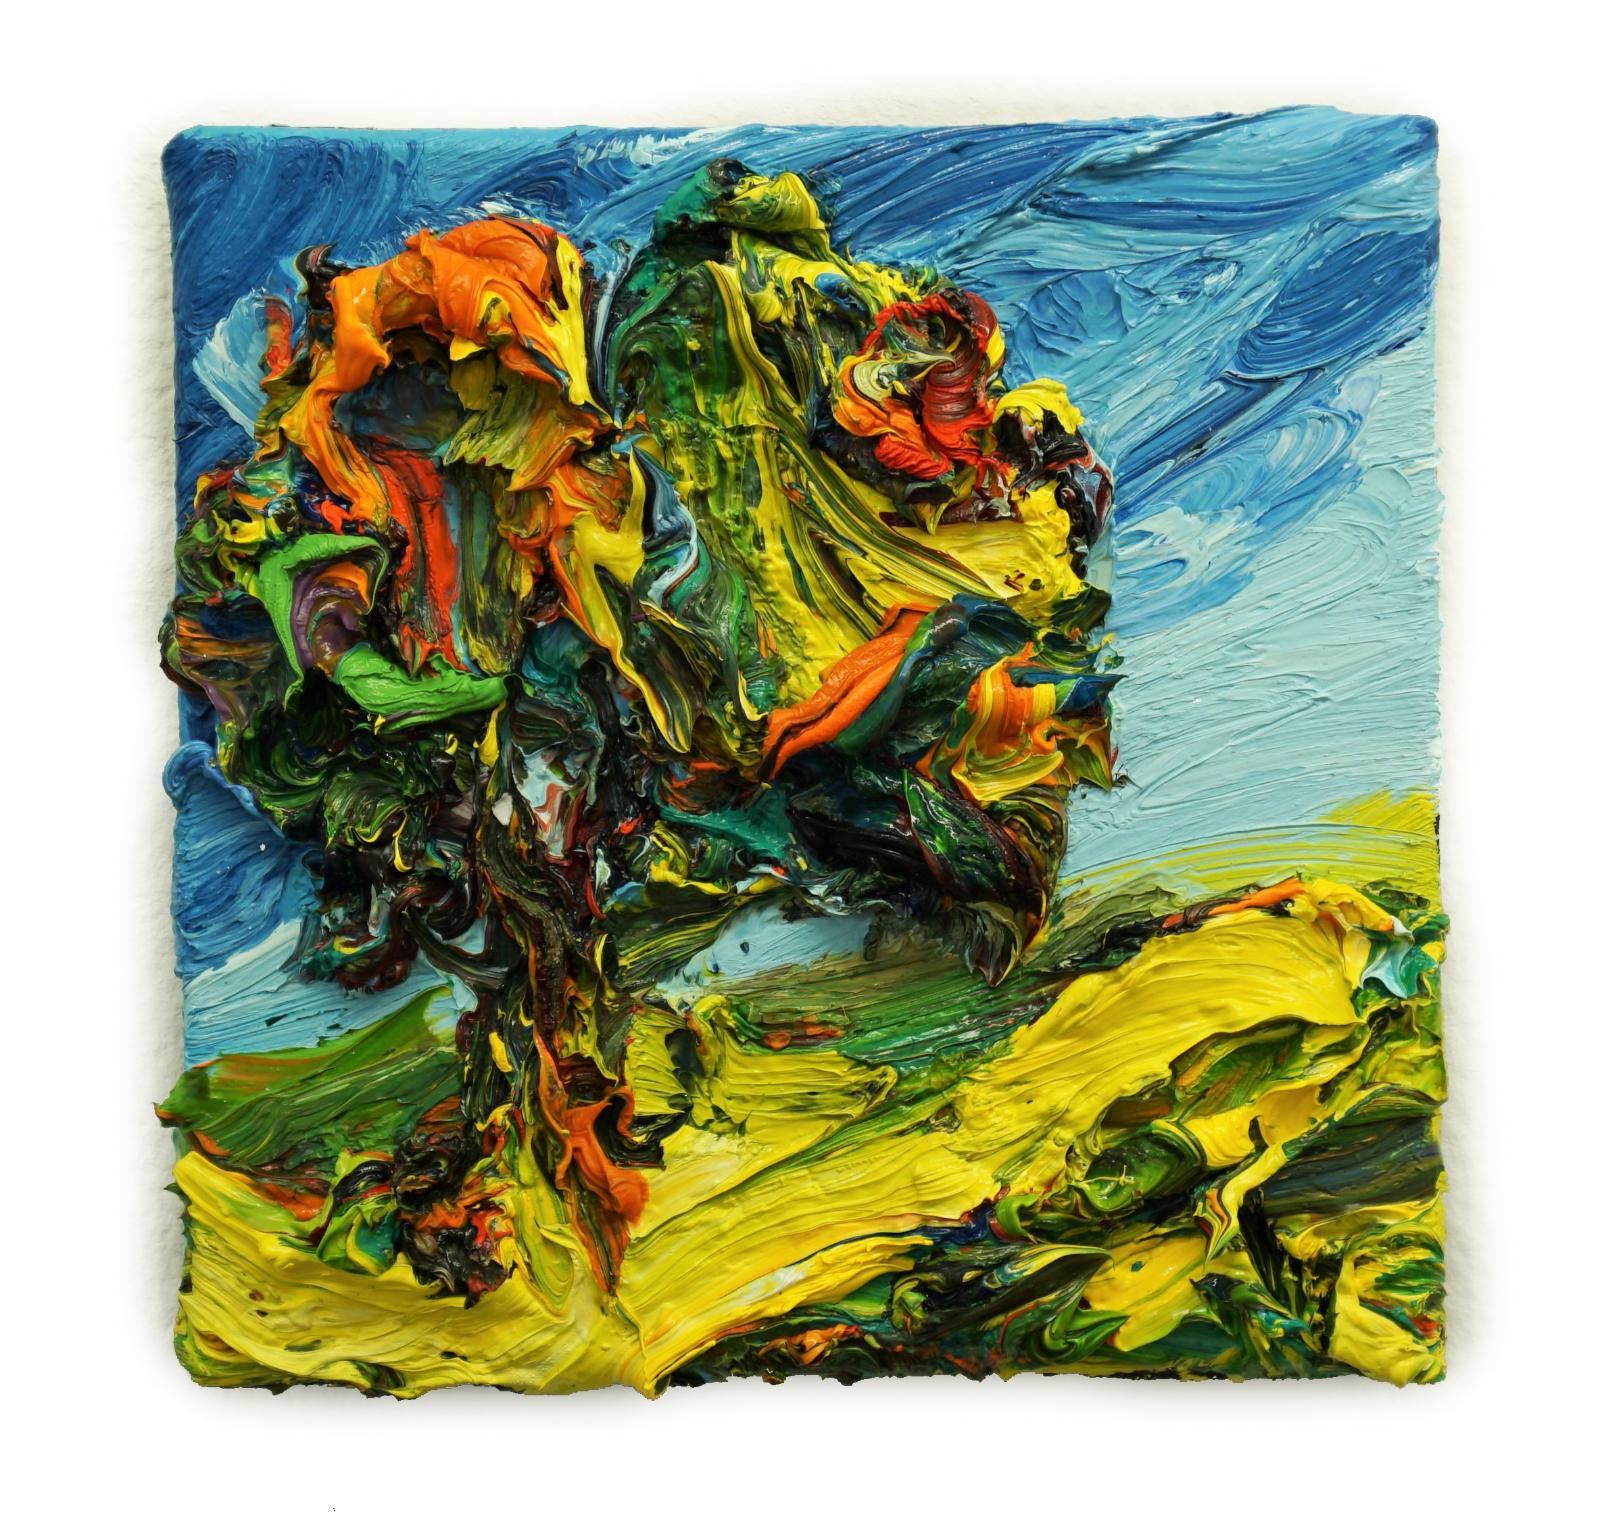 Harry Meyer, Baum, 2020, Öl auf Leinwand, 20 x 20 cm, meh003ko